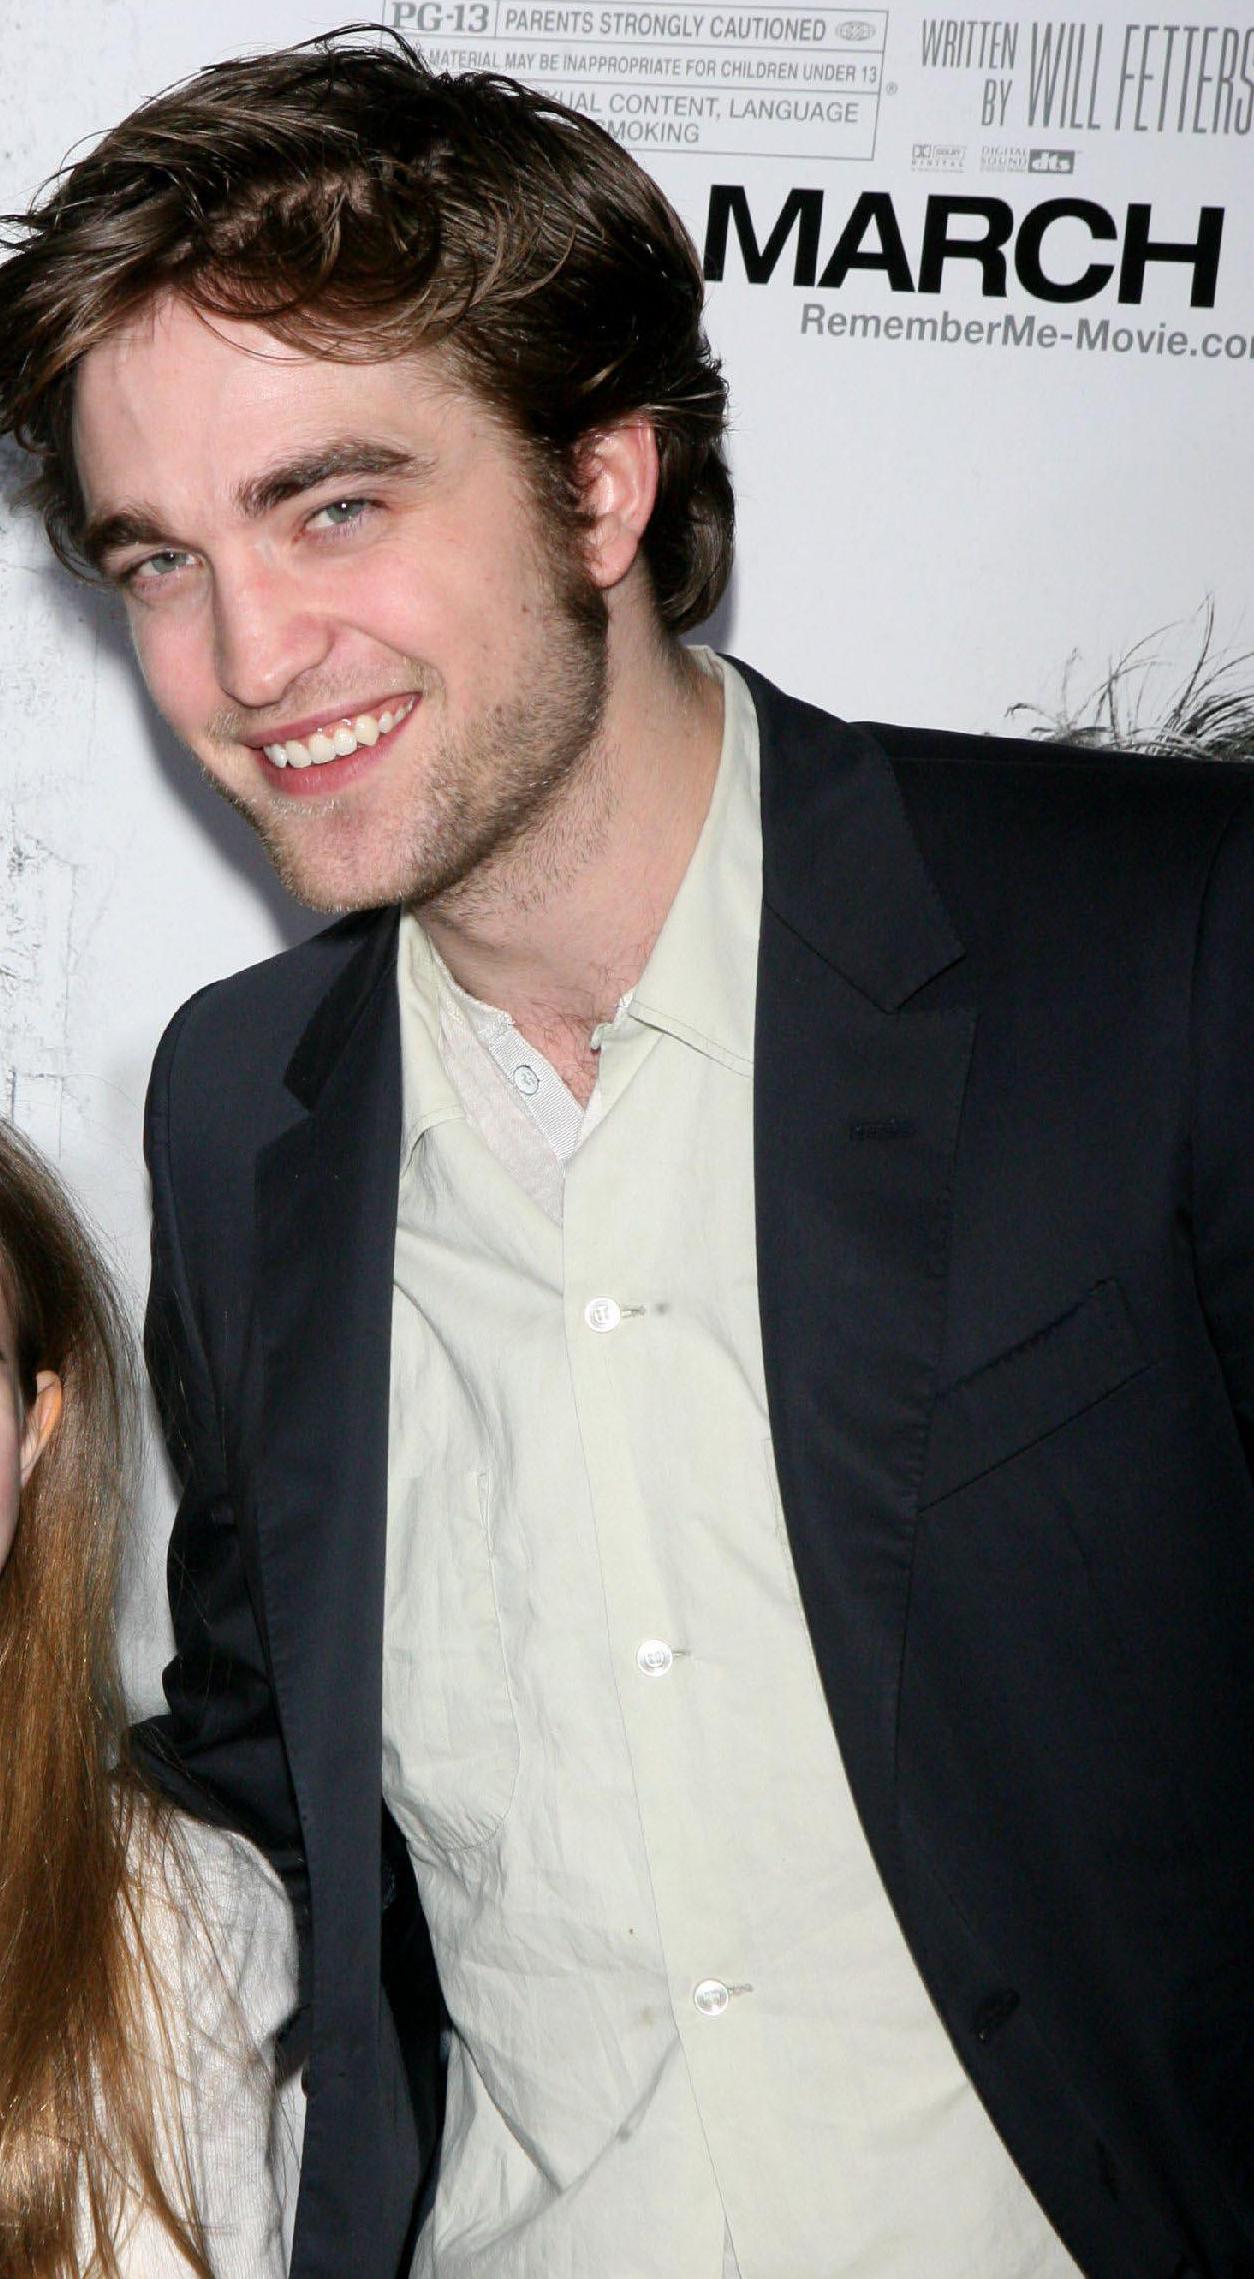 Robert Pattinson [Twilight] | The Male Celebrity1254 x 2279